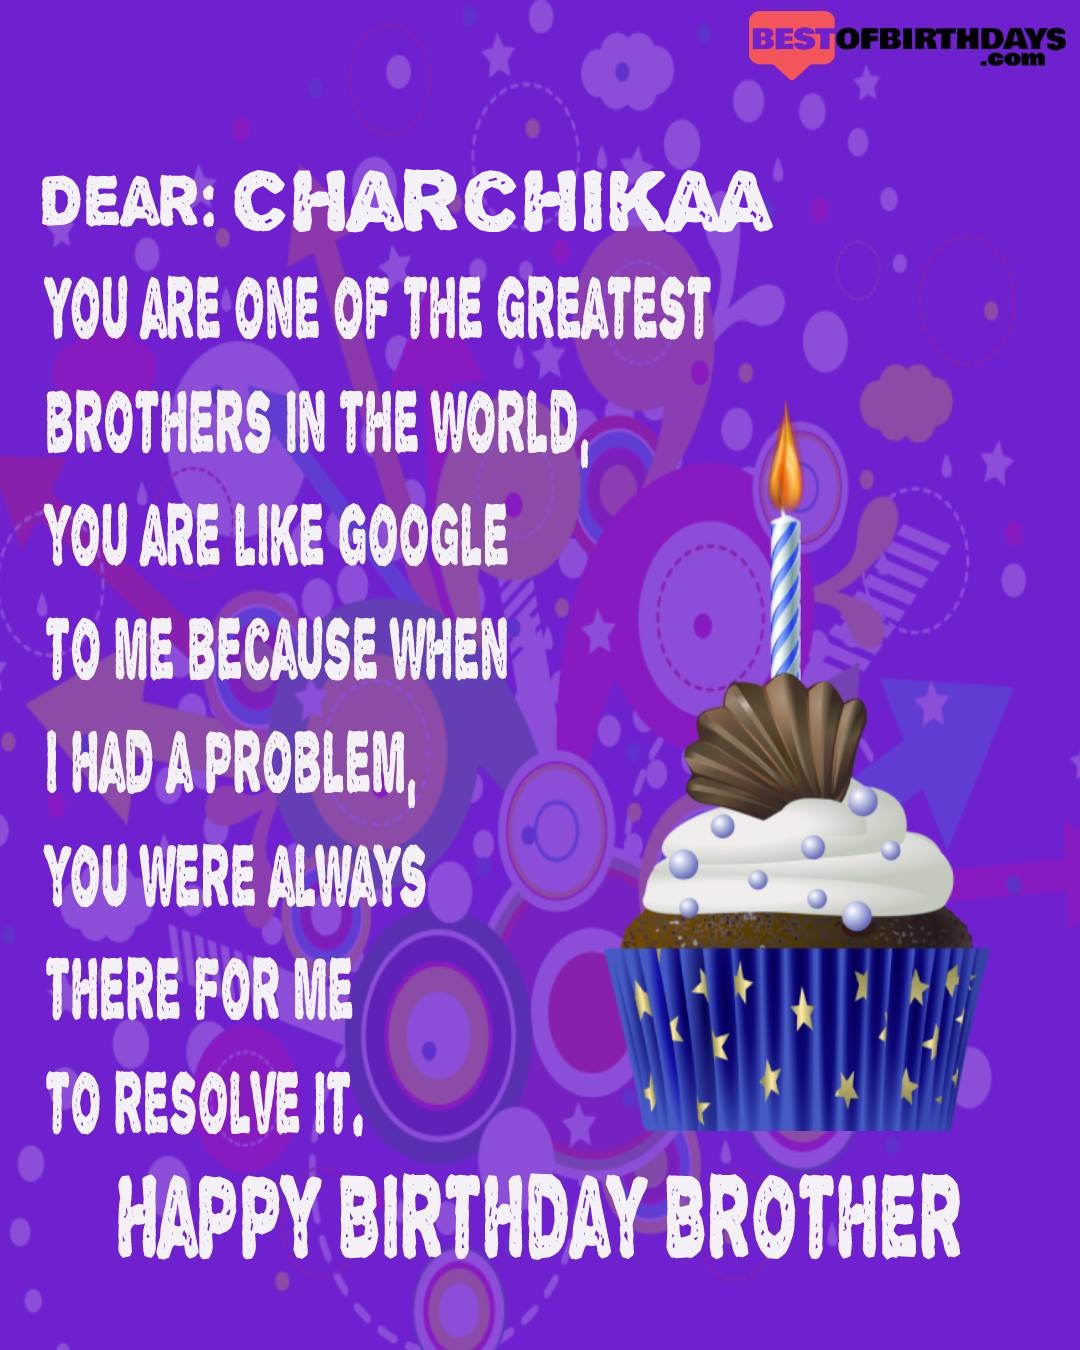 Happy birthday charchikaa bhai brother bro